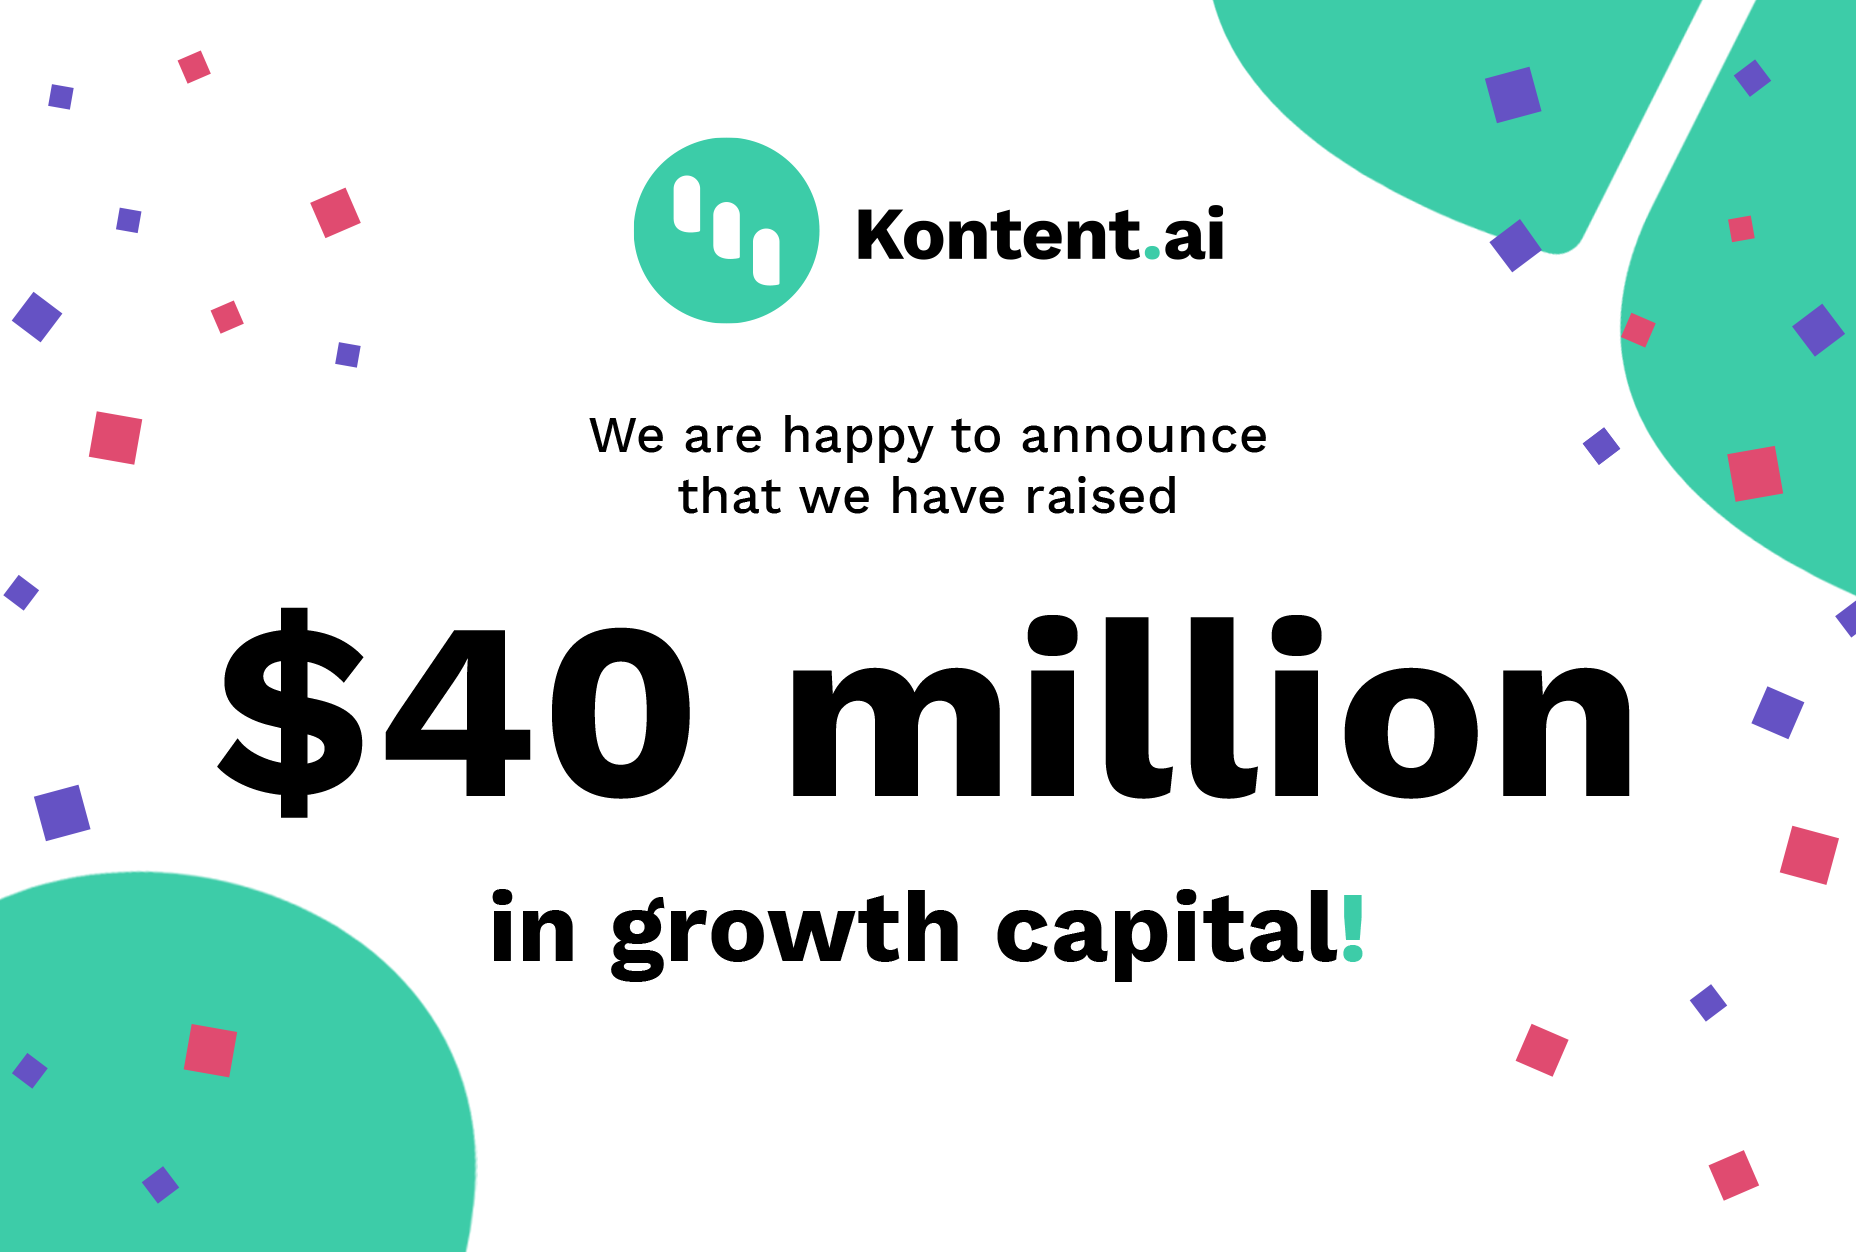 Kontent.ai has raised $40 million in growth capital